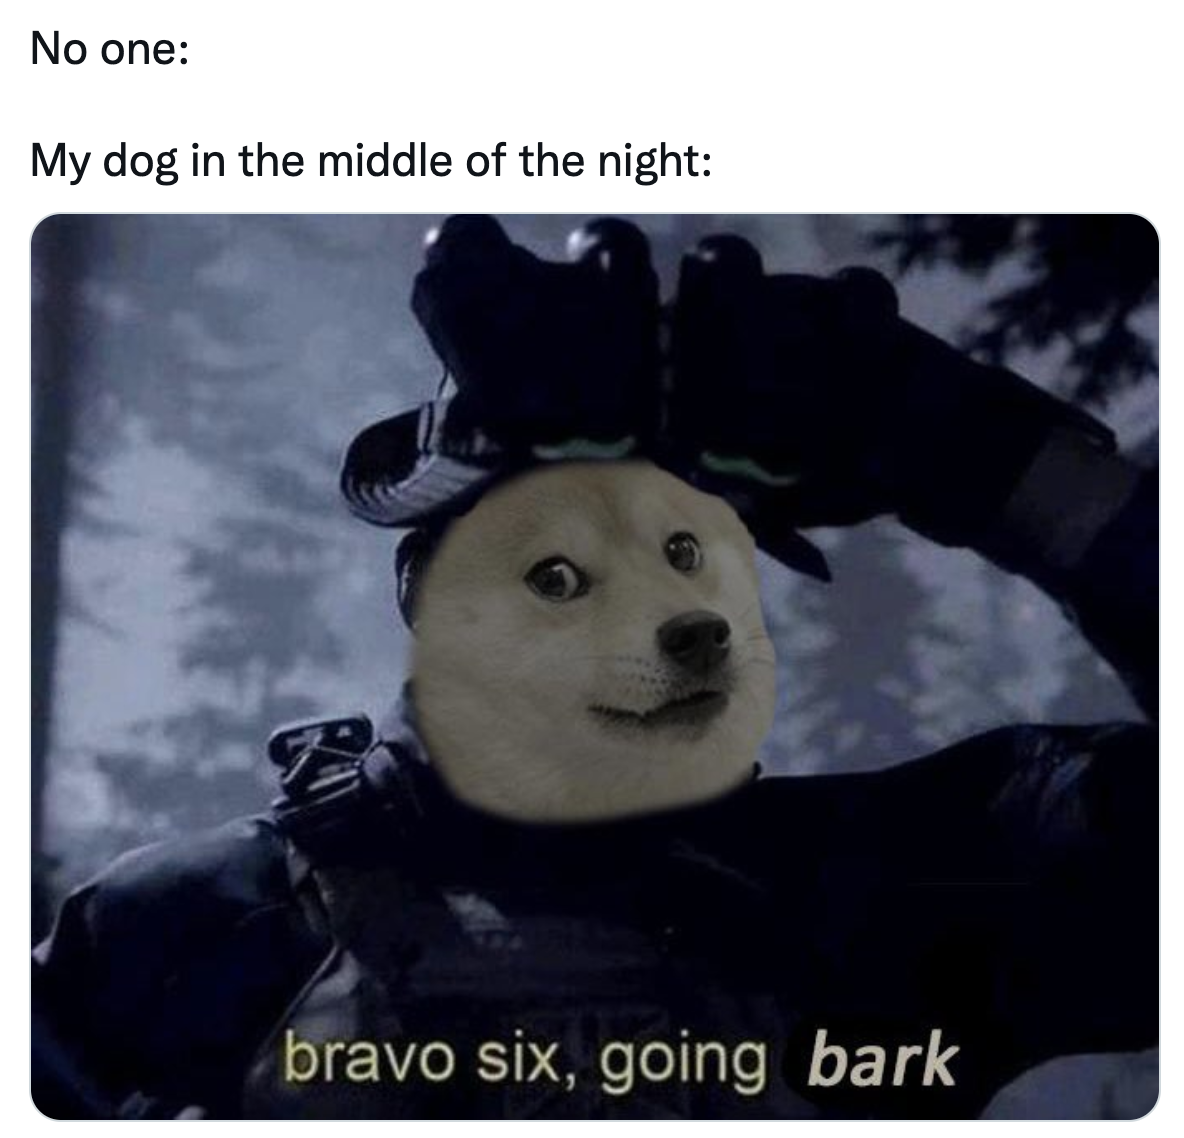 &quot;bravo six, going bark&quot;